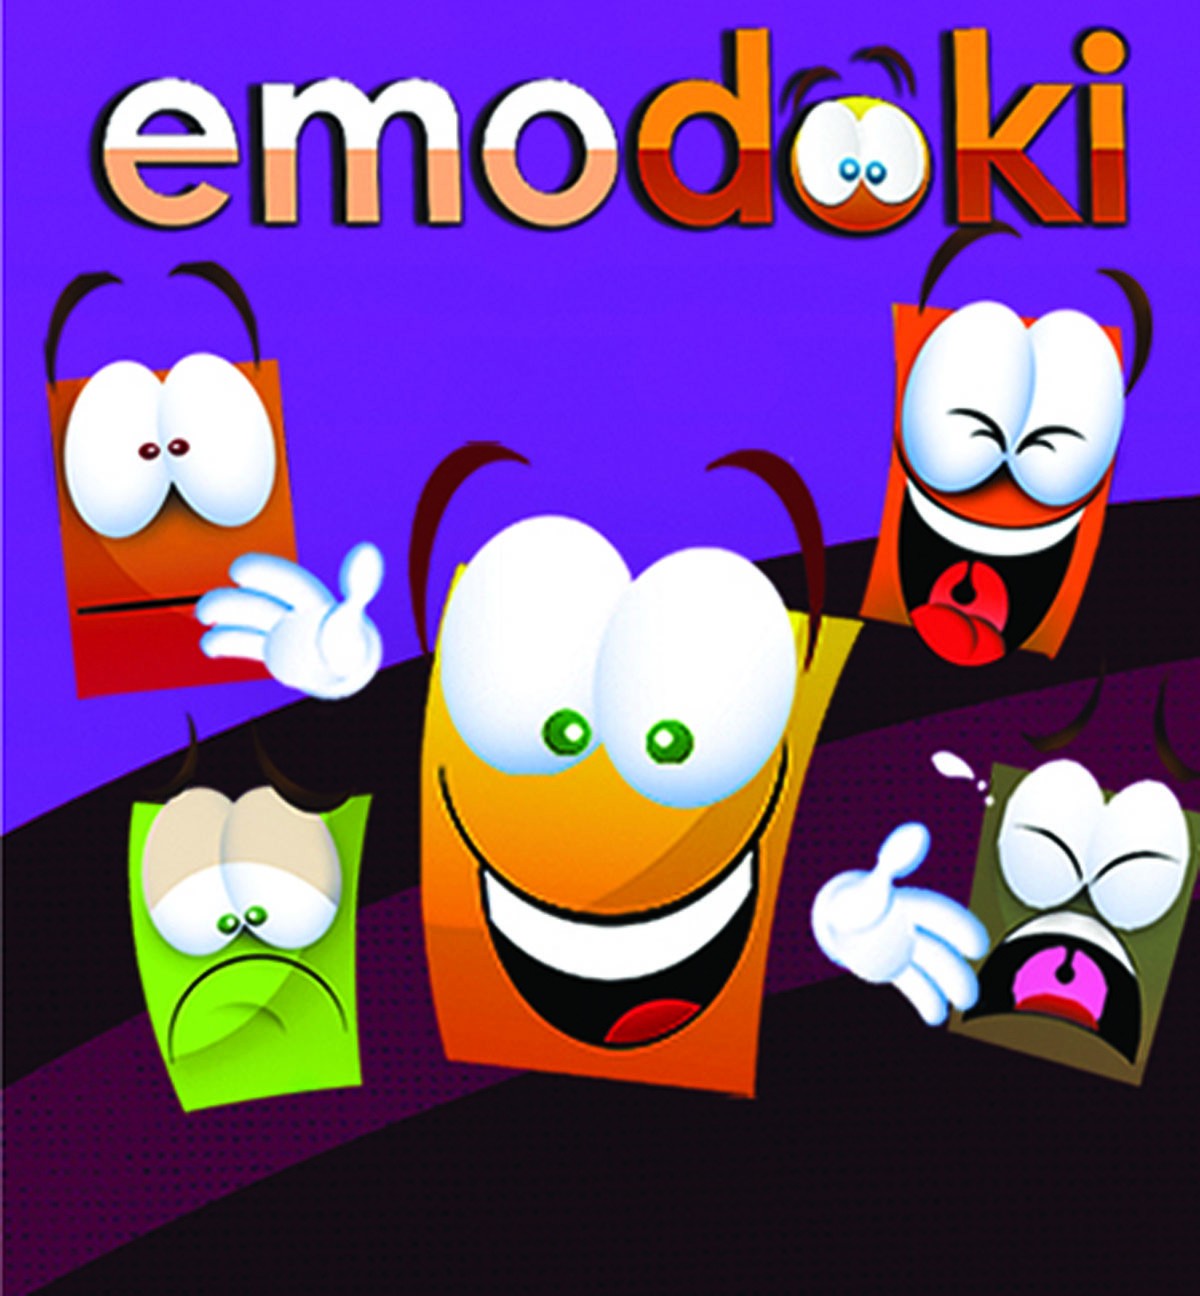 Emodoki